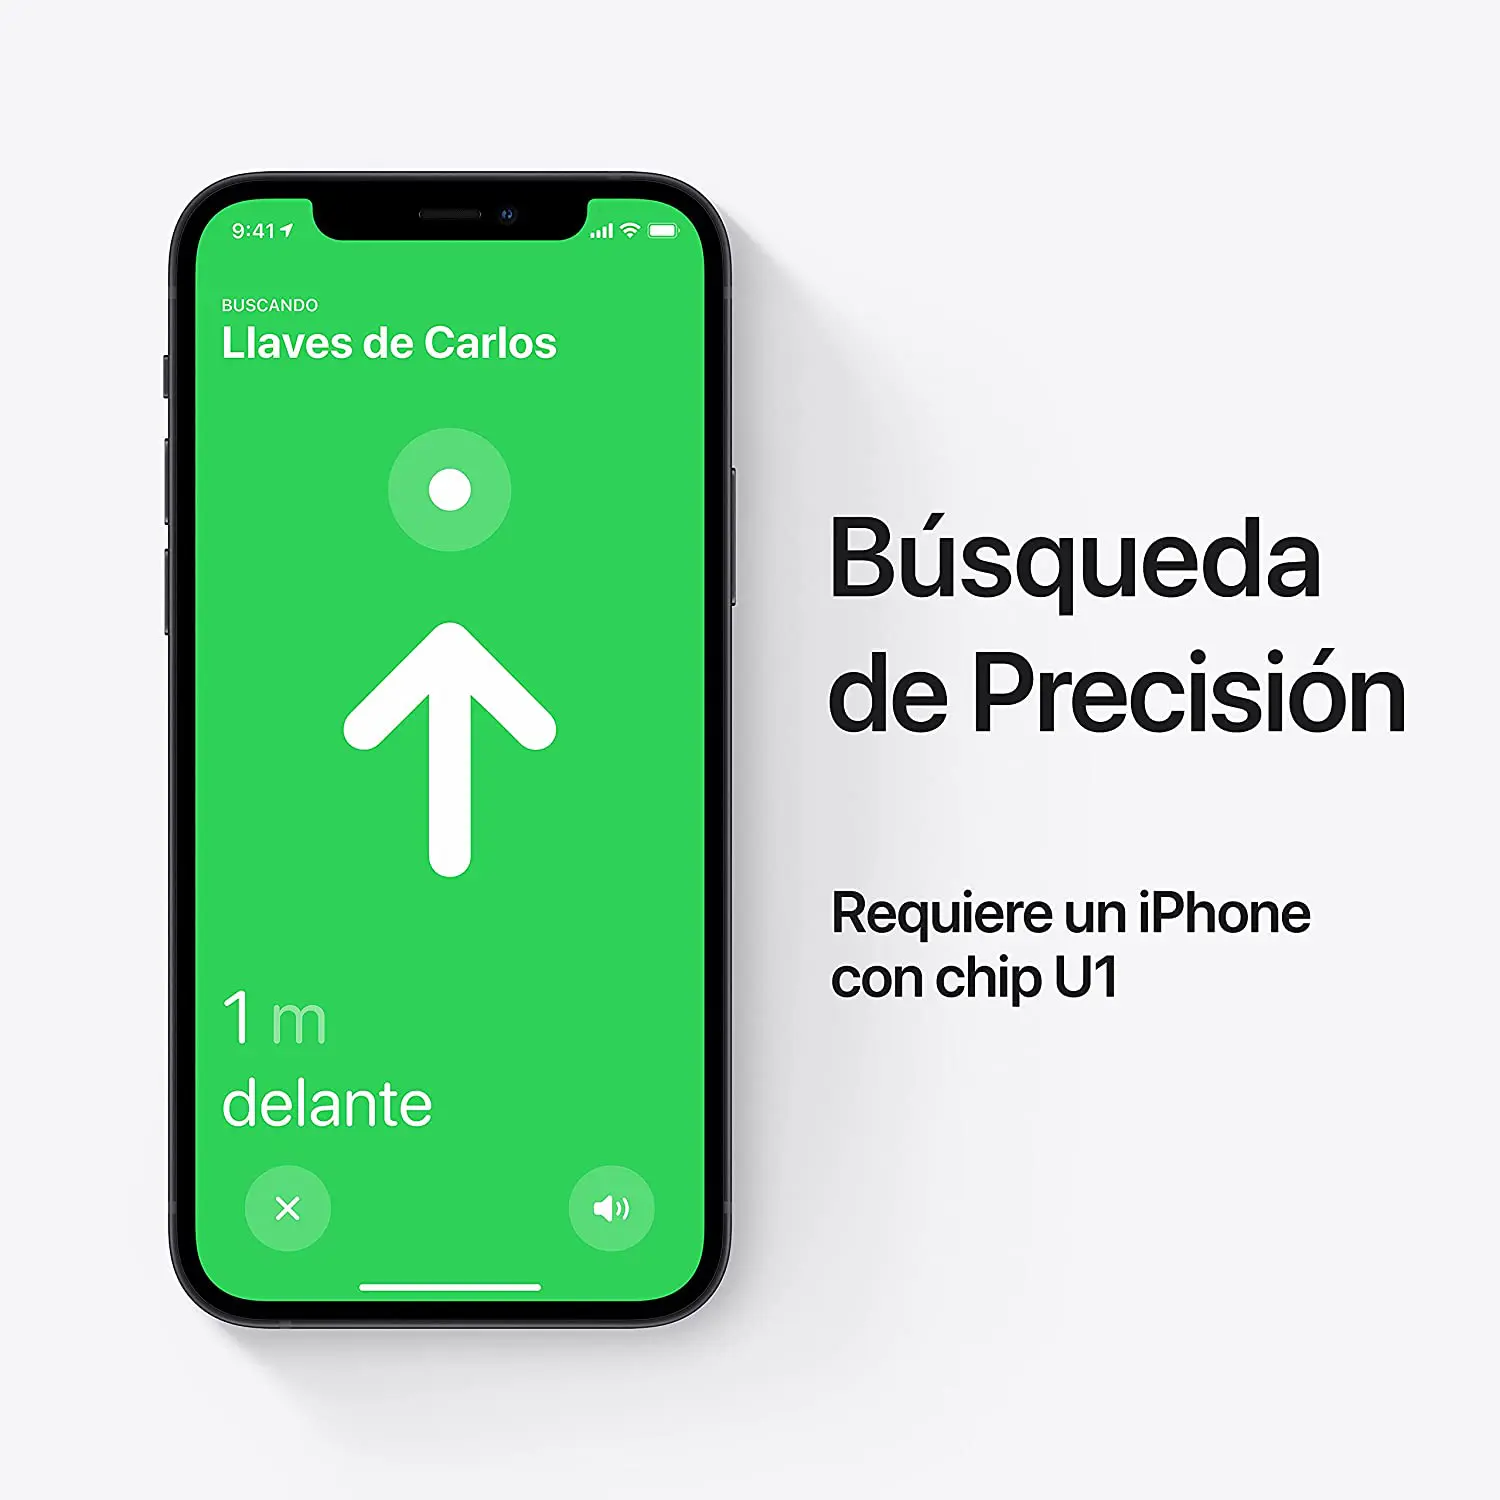 Apple AirTag de precisión en app buscar